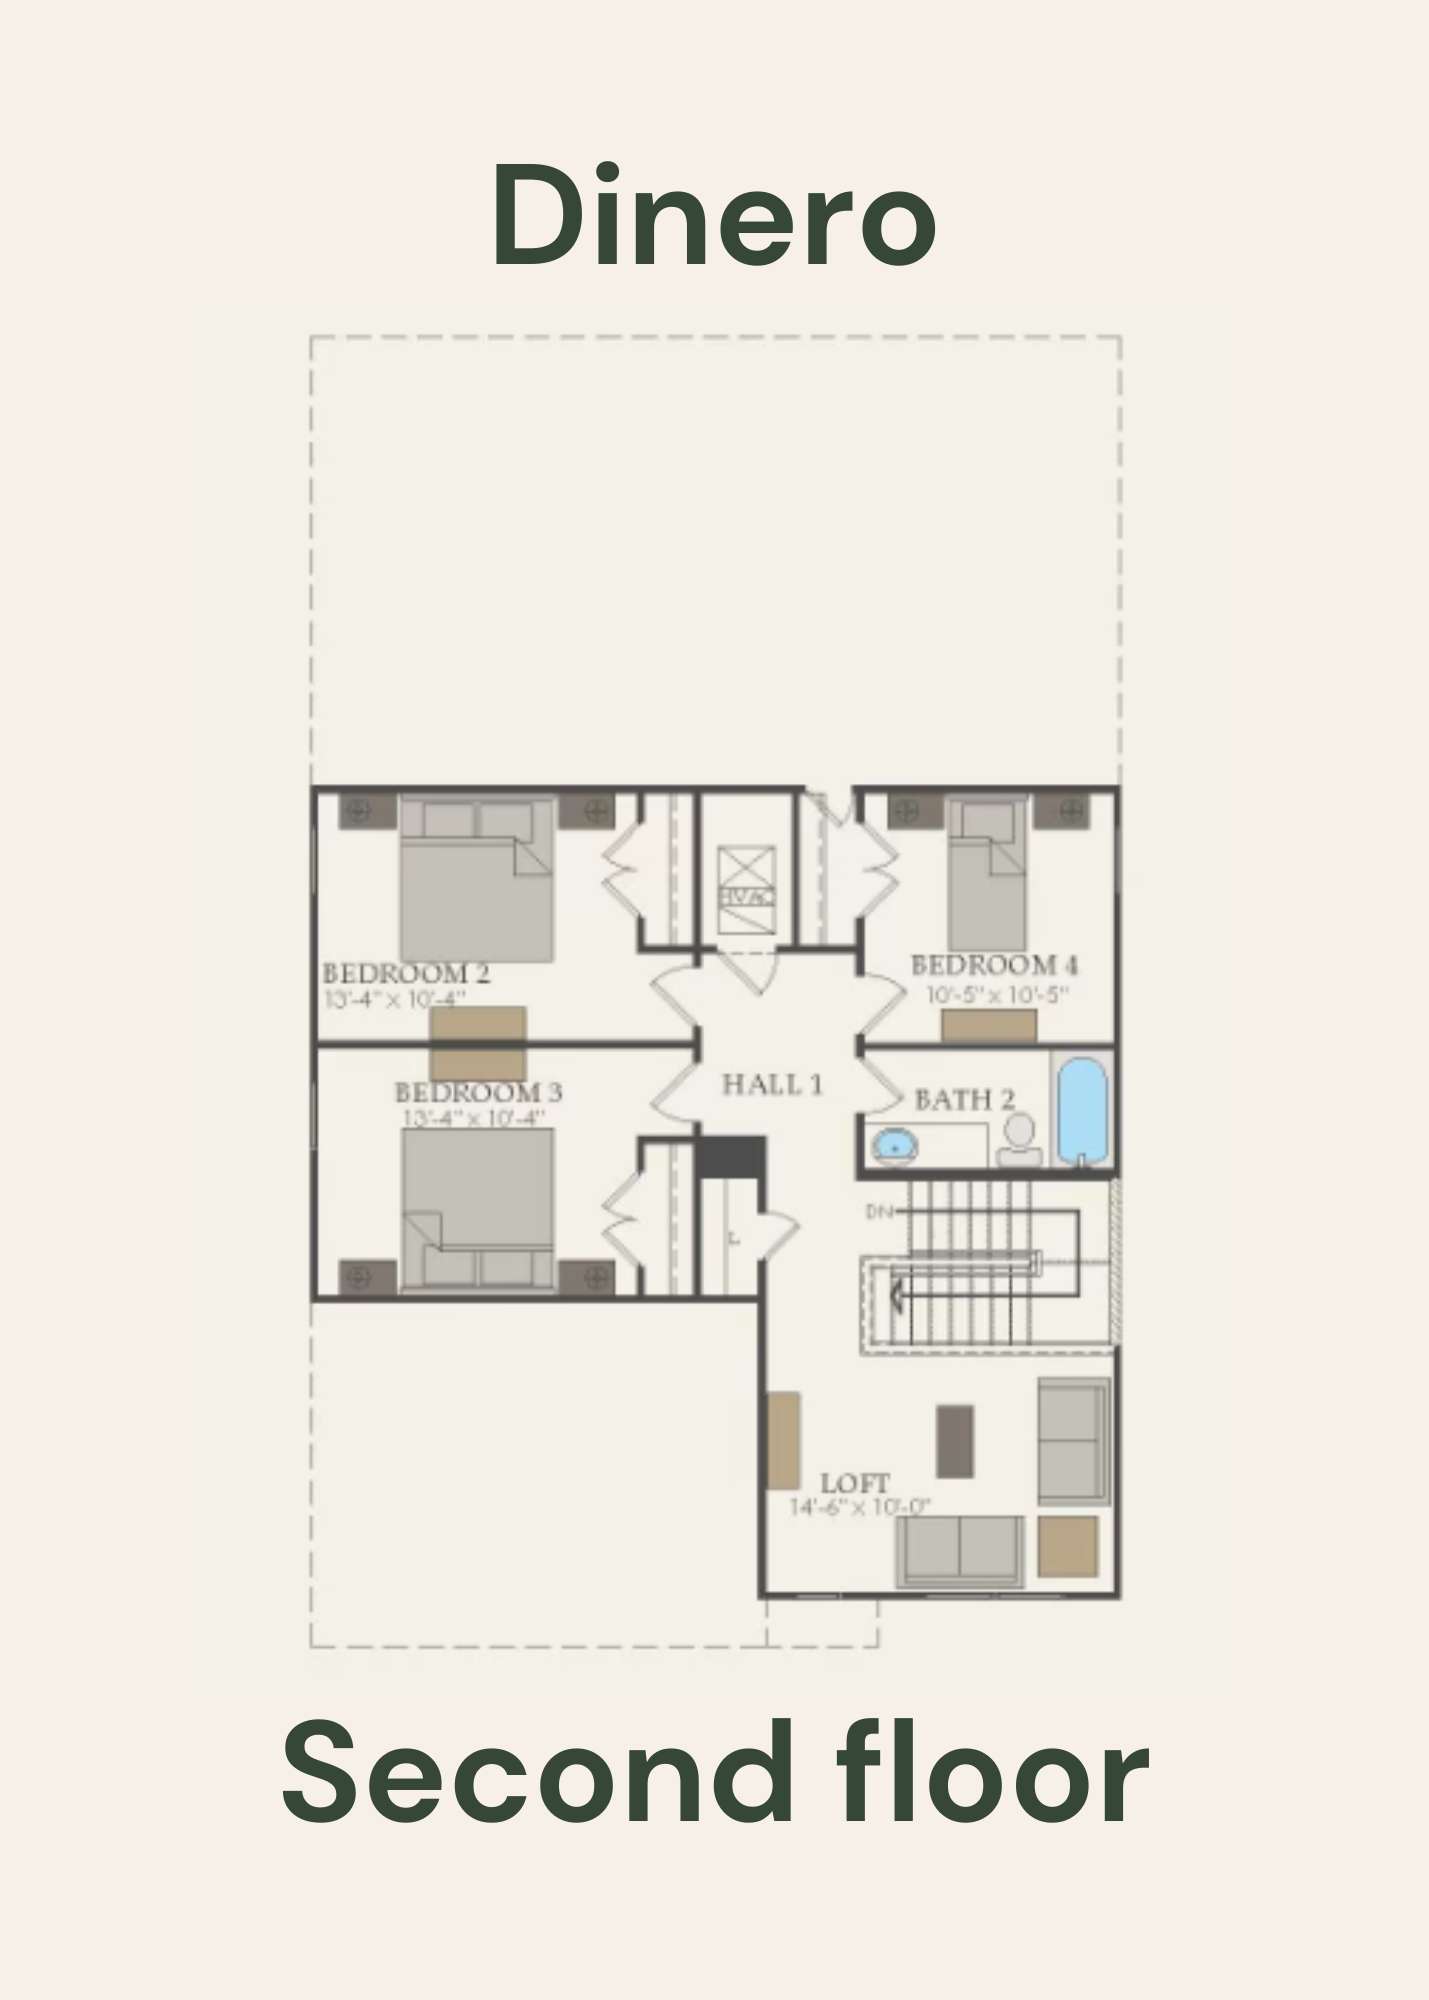 Dinero Second Floor - Floor Plan by Centex Homes